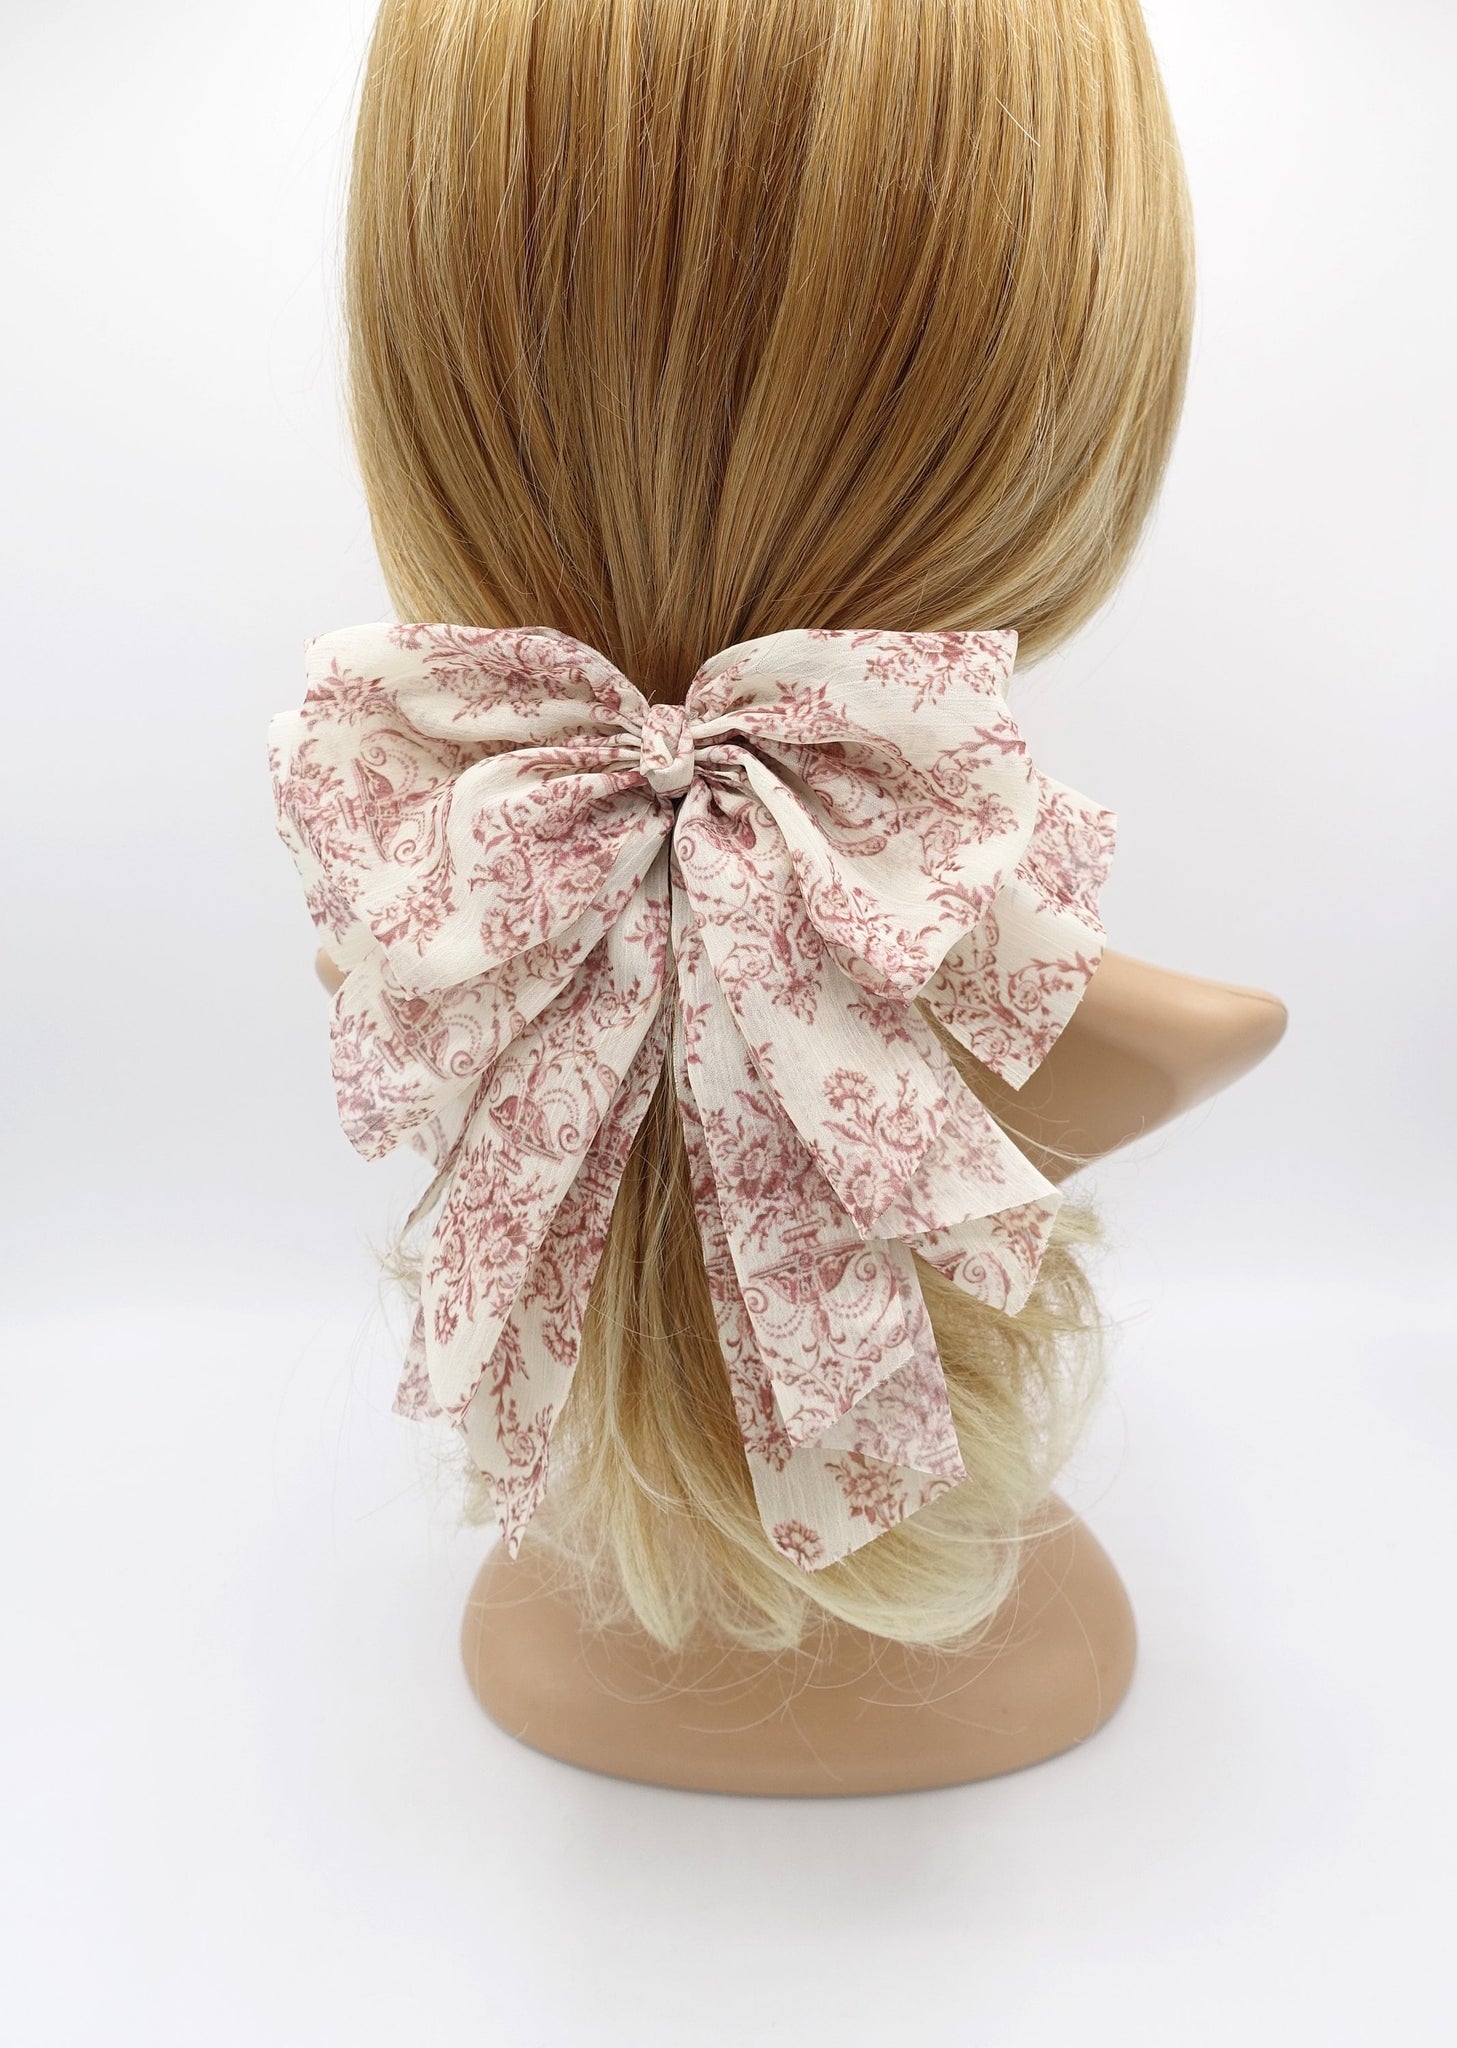 veryshine.com Barrette (Bow) Red wine floral hair bow, paisley hair bow, floral paisley hair bow for women